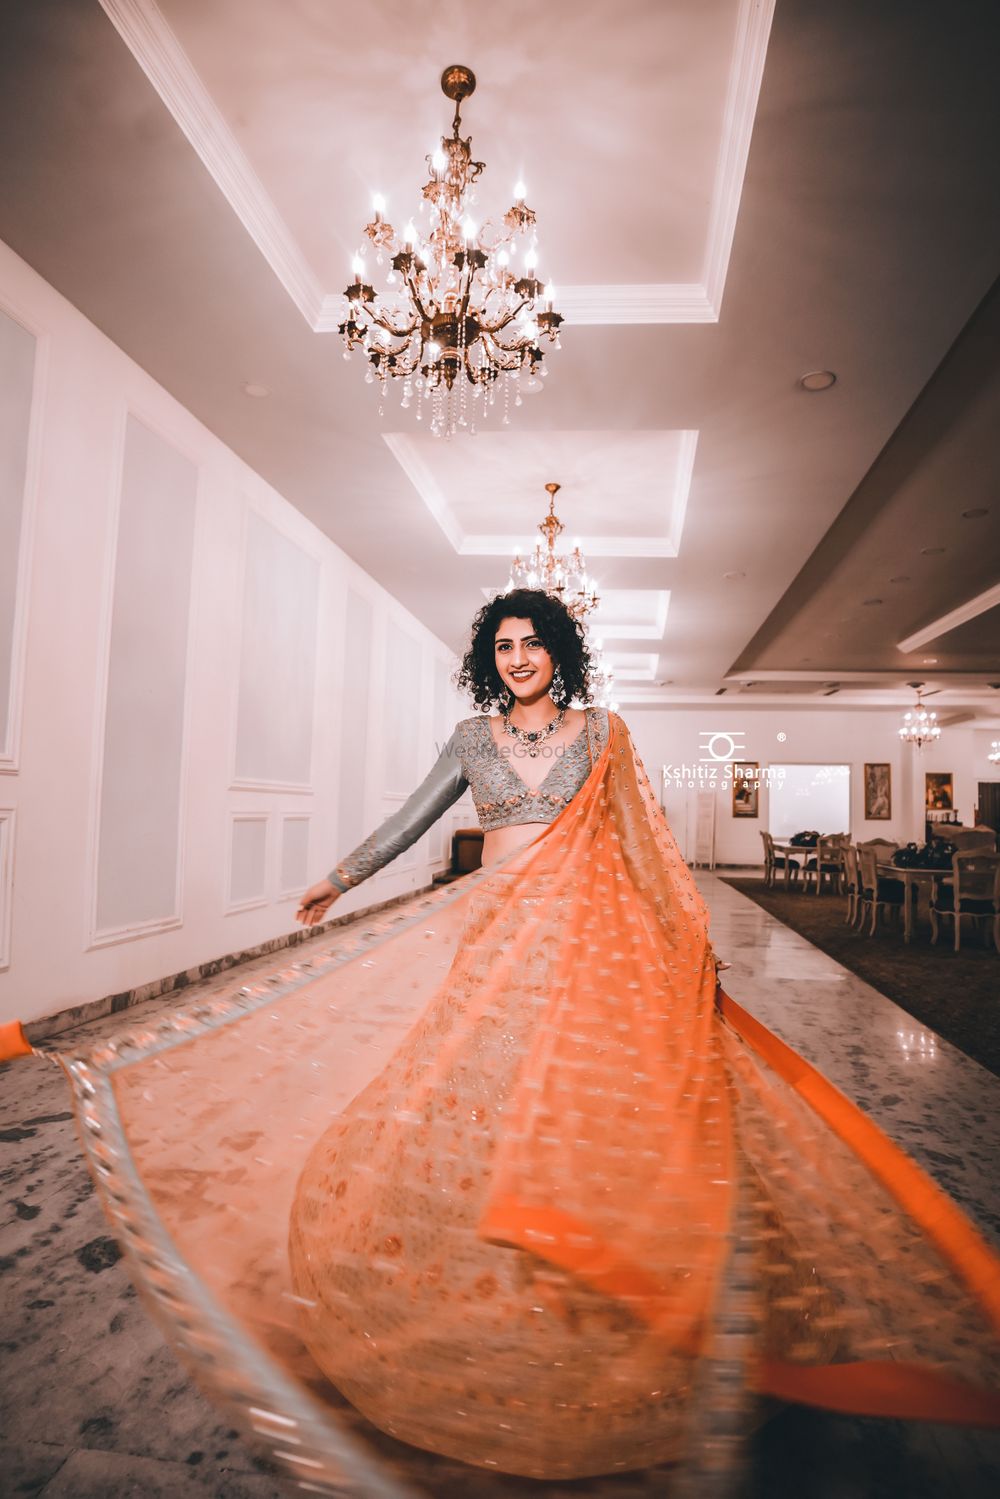 Photo From Brides - By Kshitiz Sharma Photography